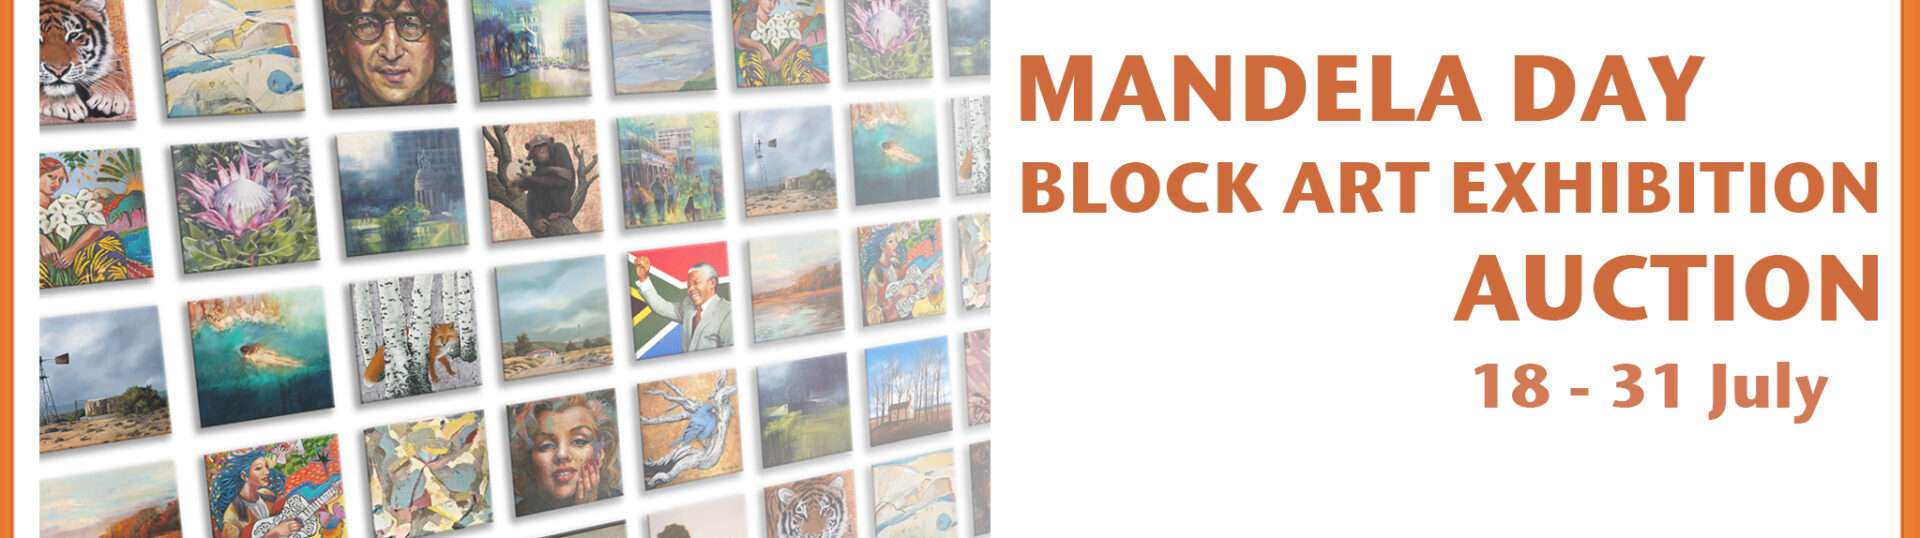 The Studio Art Gallery - Exhibition Header - Mandela Day Block Art Exhibition Auction